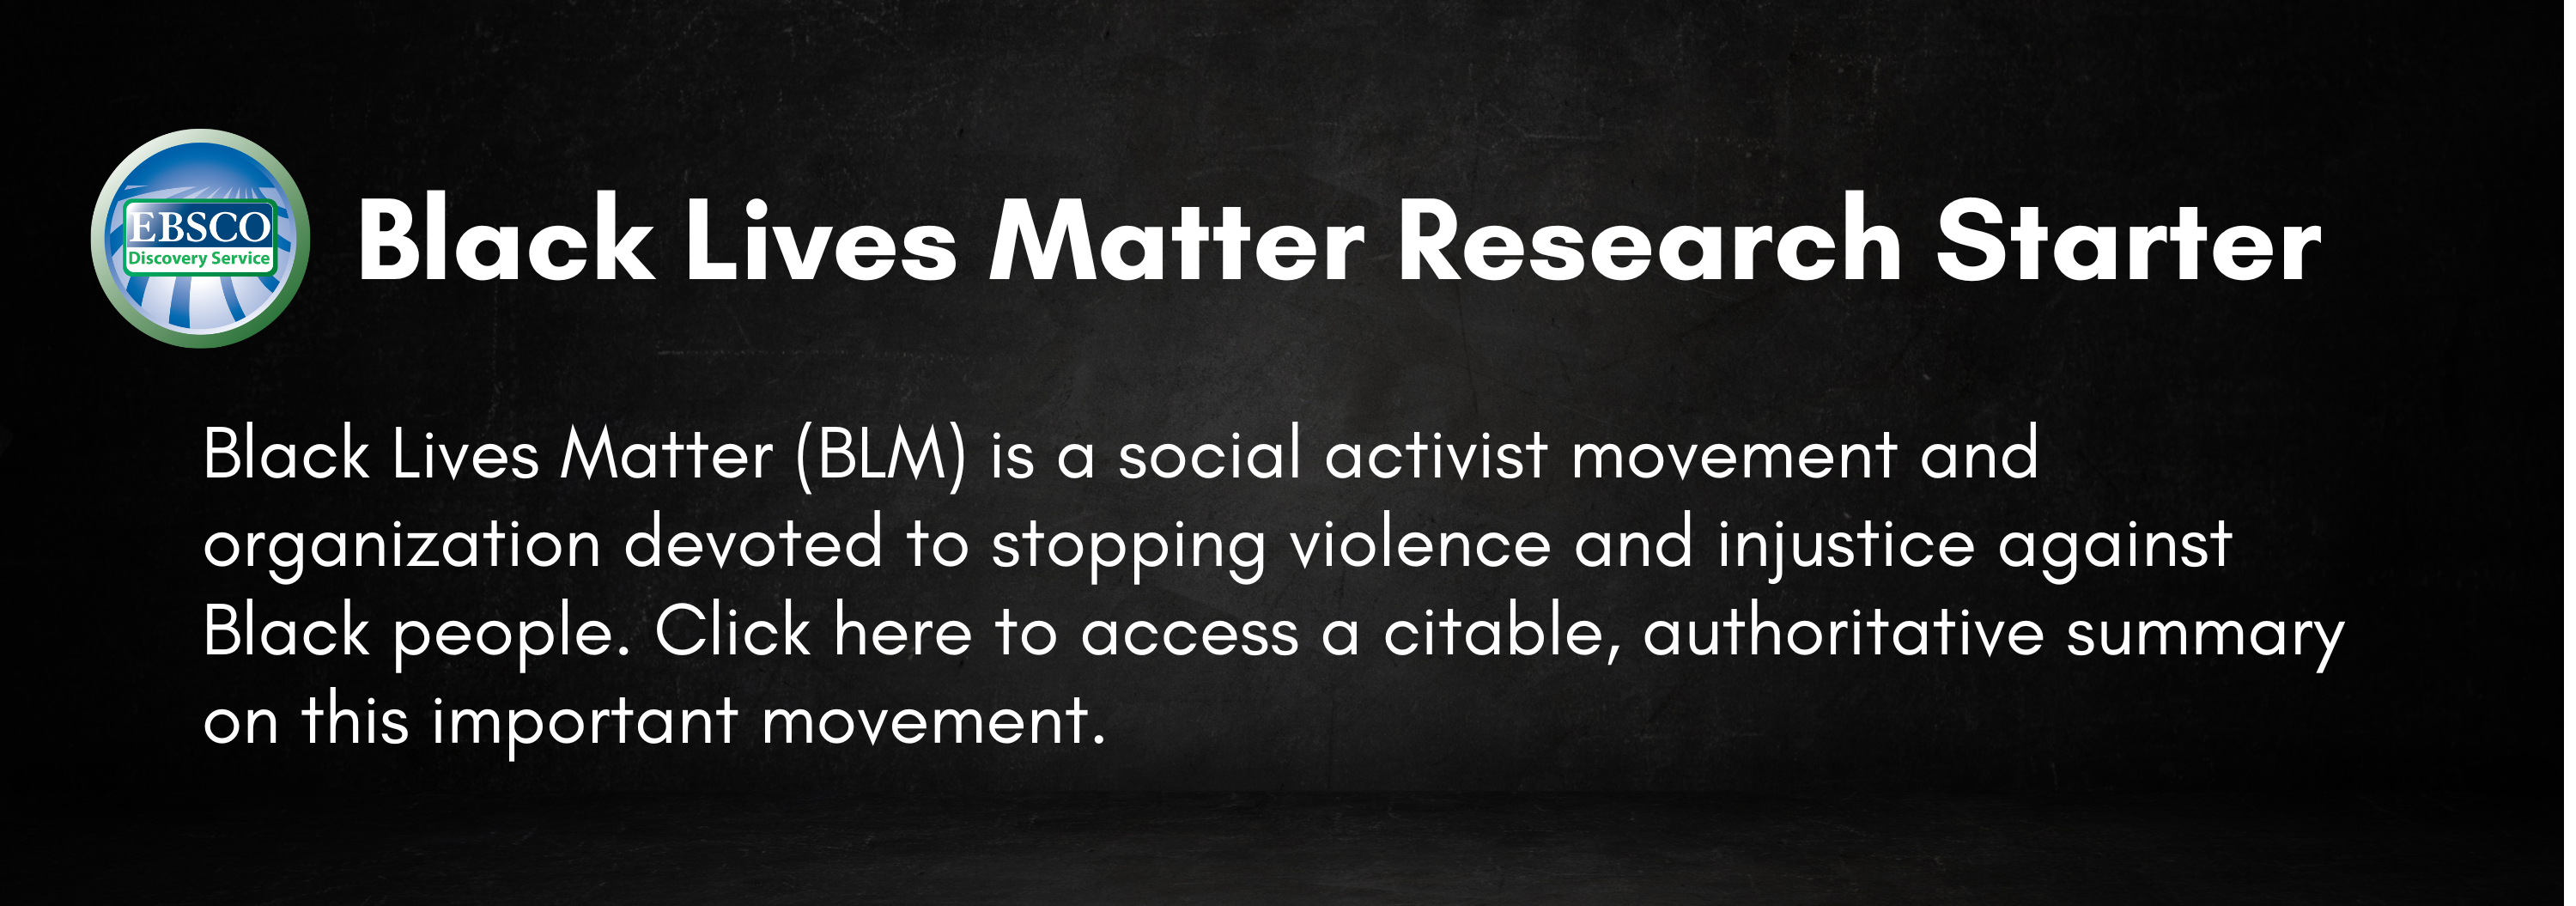 Black Lives Matter Research Starter from EDS